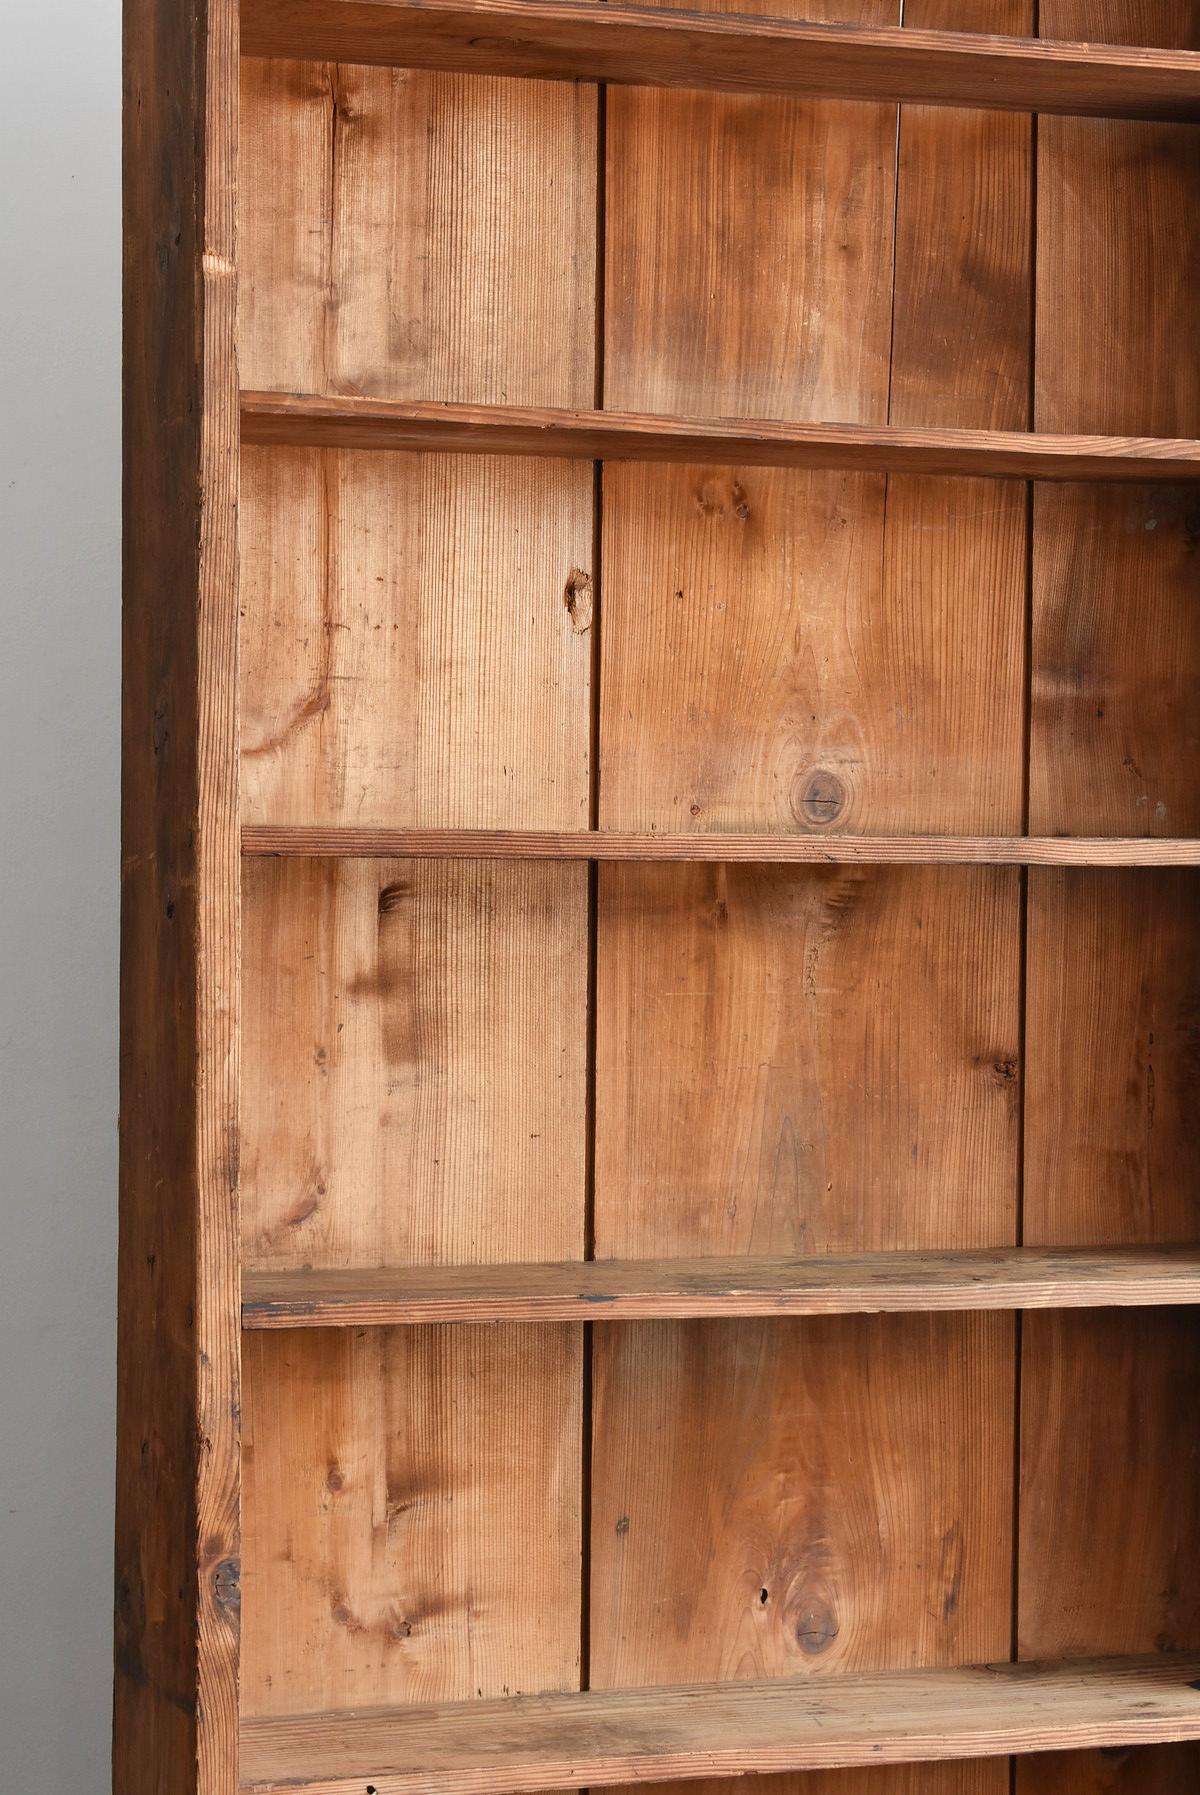 Japanese Old Simple Shelves / Wooden Thin Shelves / Exhibition Shelves 3